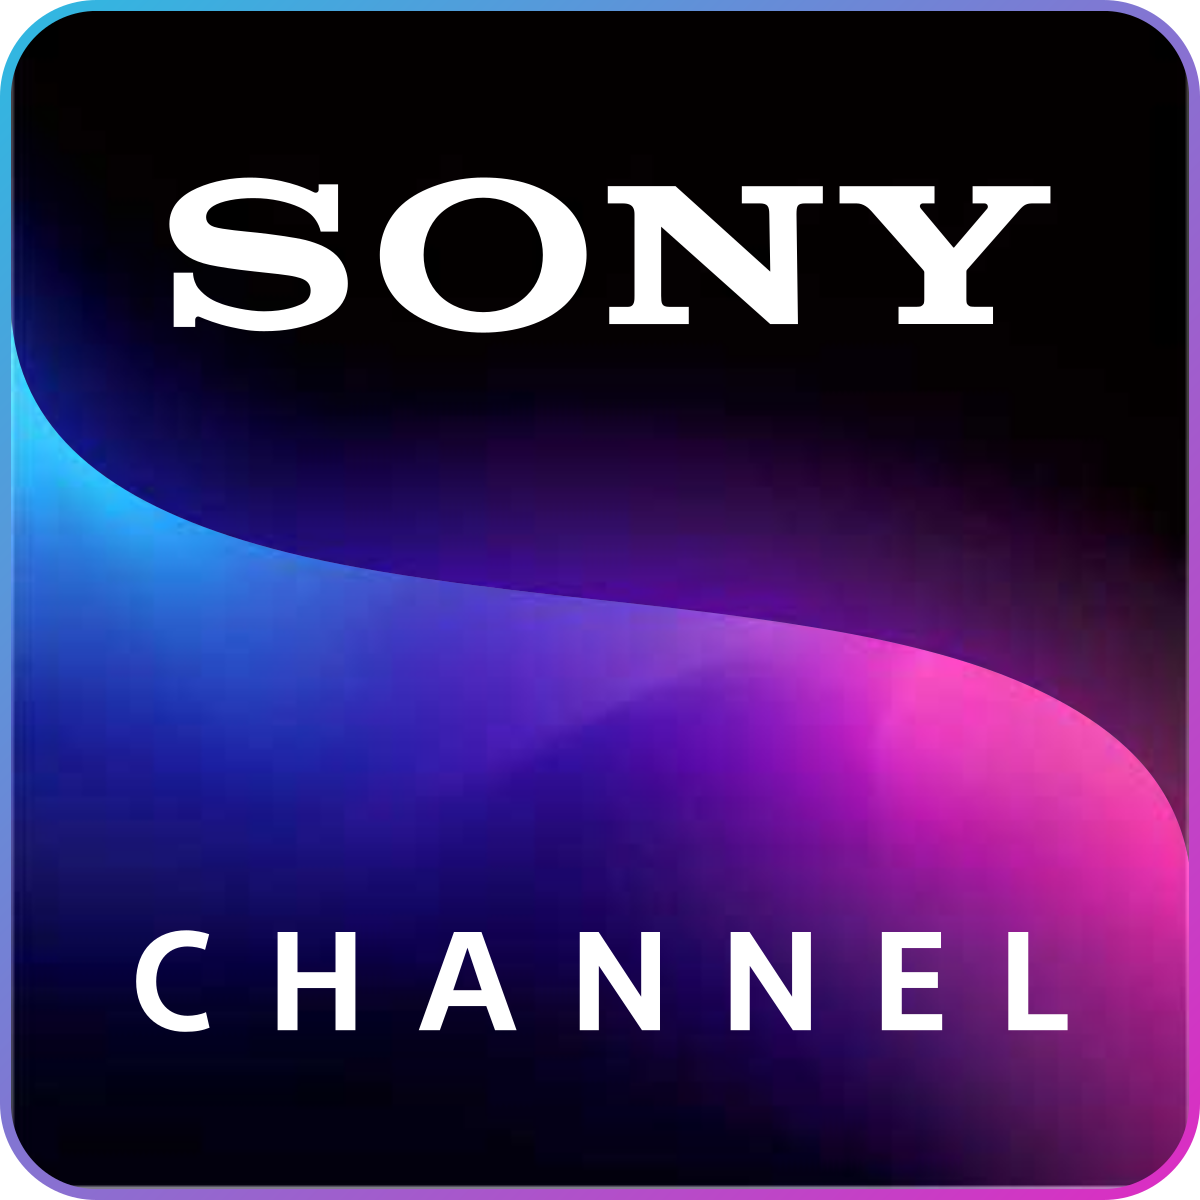 DTH Sony TV Channel Number List & Packs| Airtel Digital TV